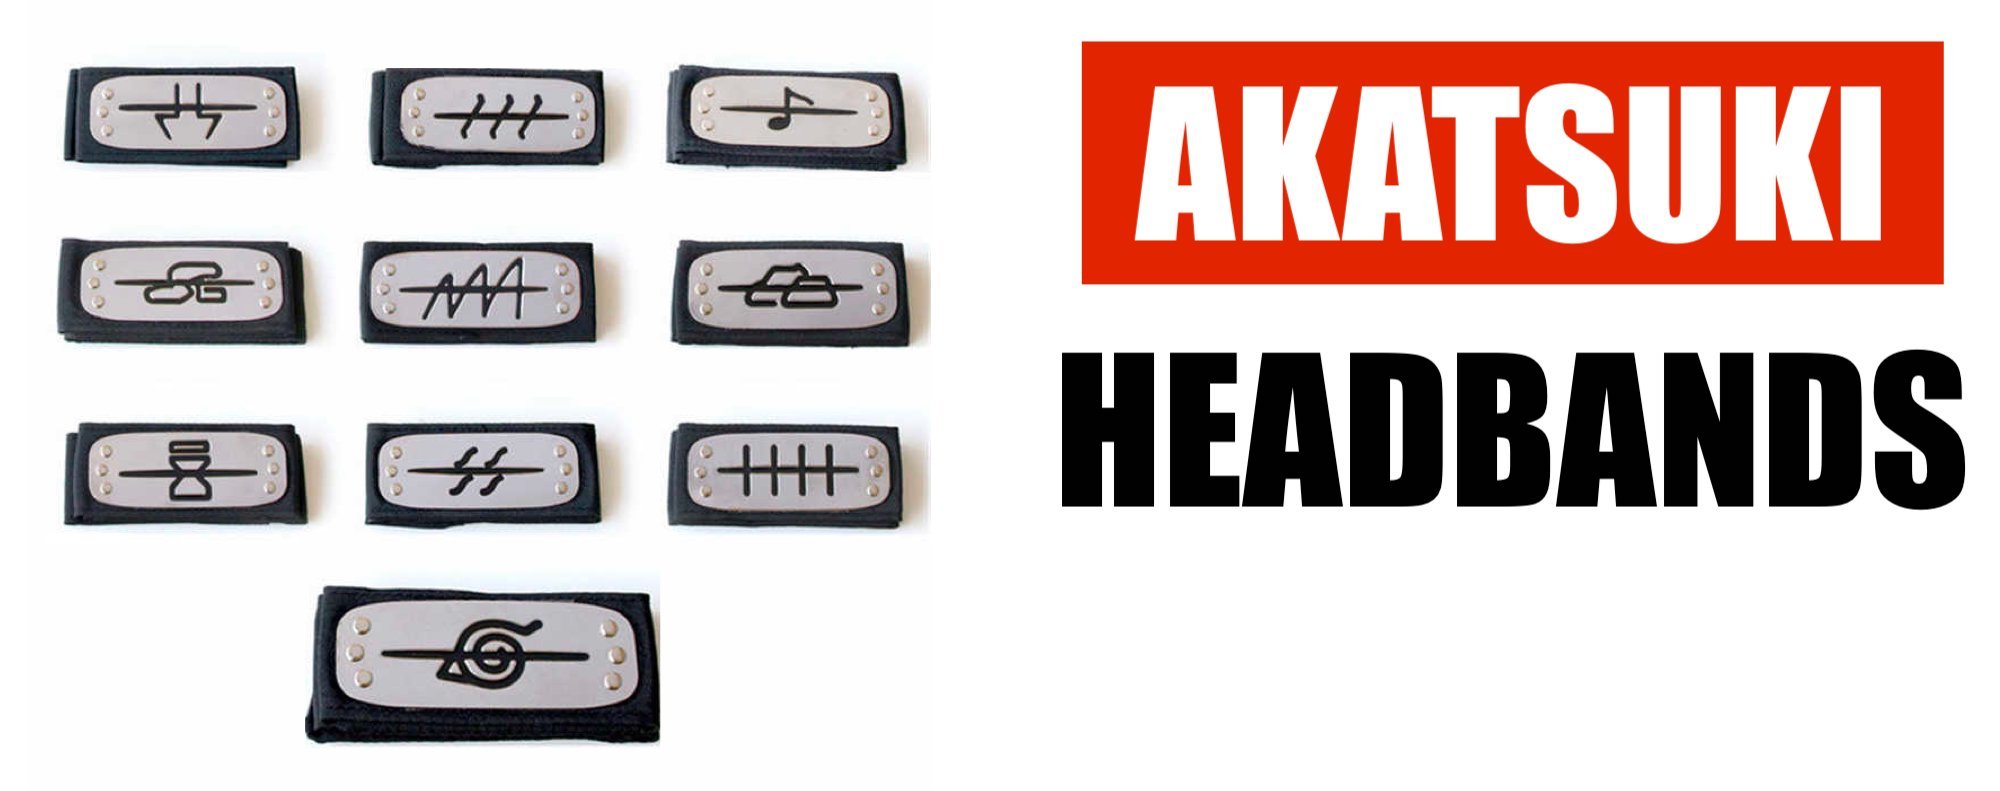 Akatsuki Headband Symbols